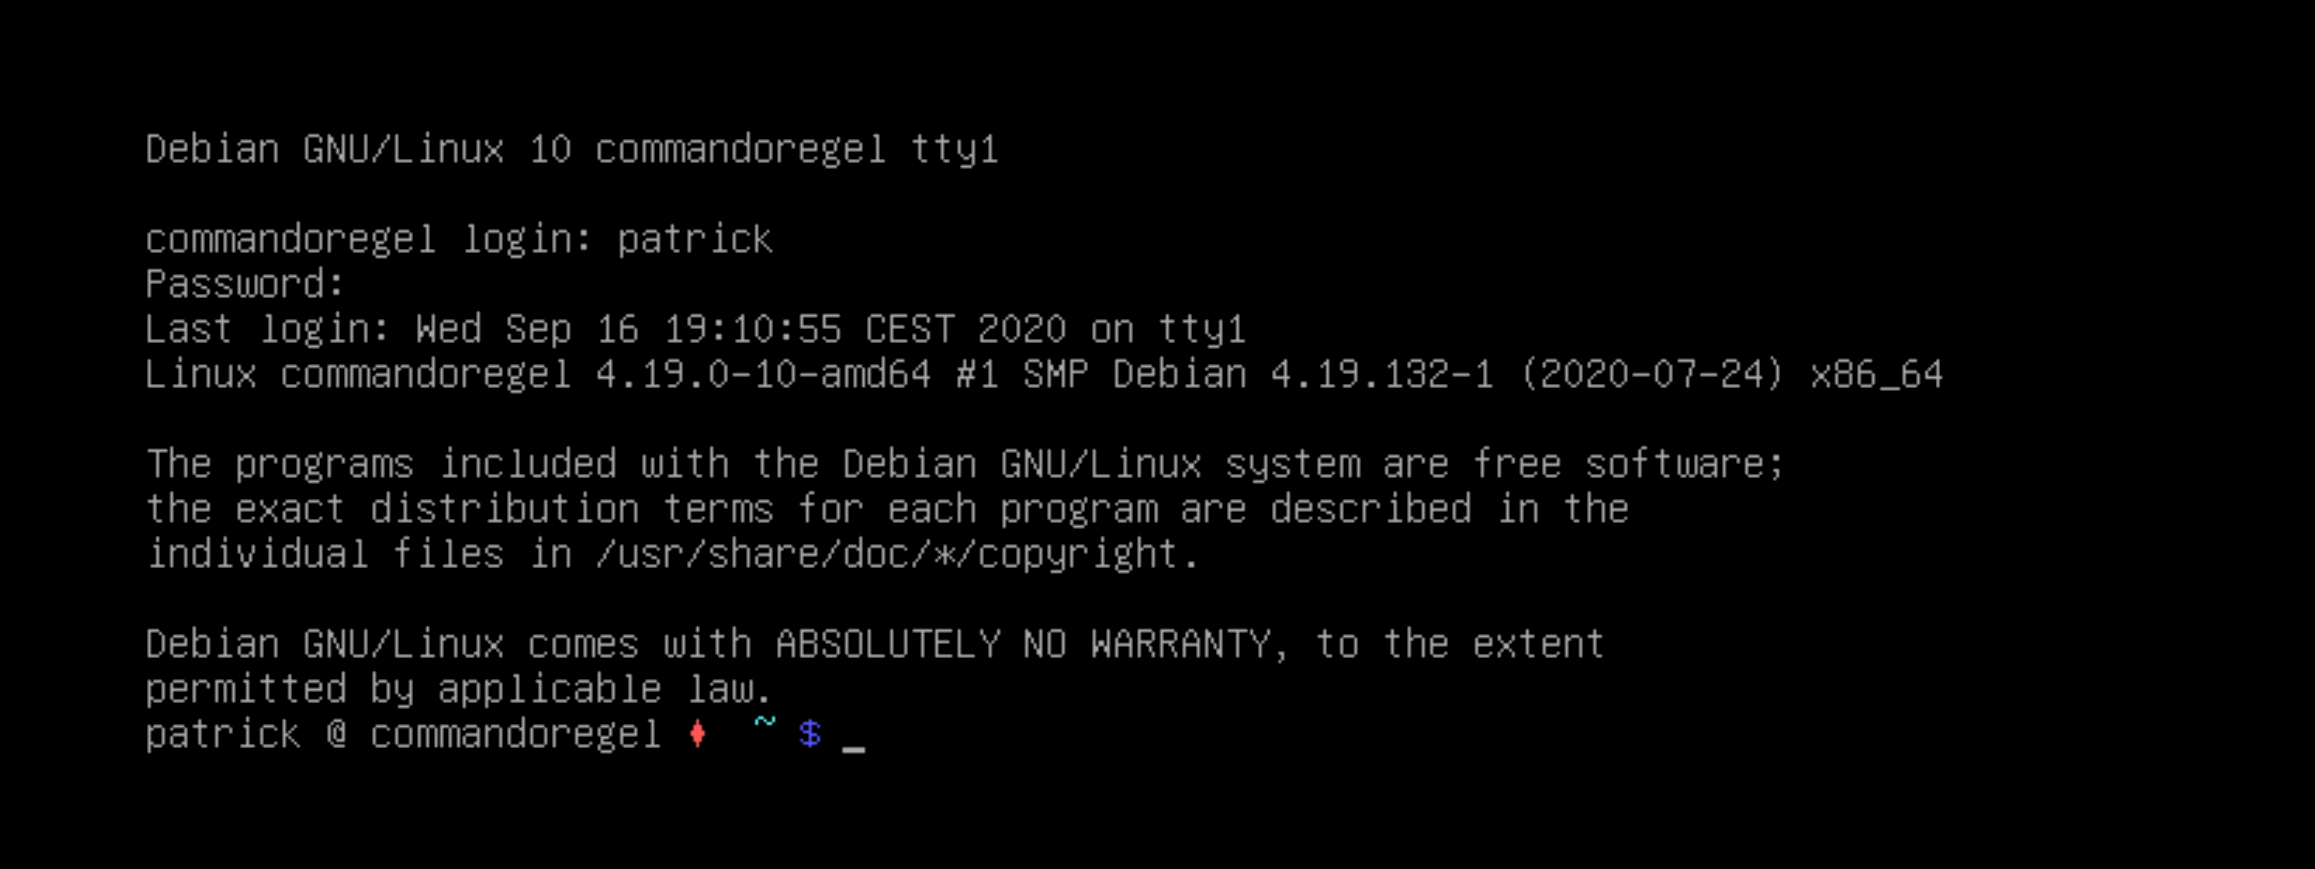 De commandoregel van Debian GNU/Linux 10 (Buster)